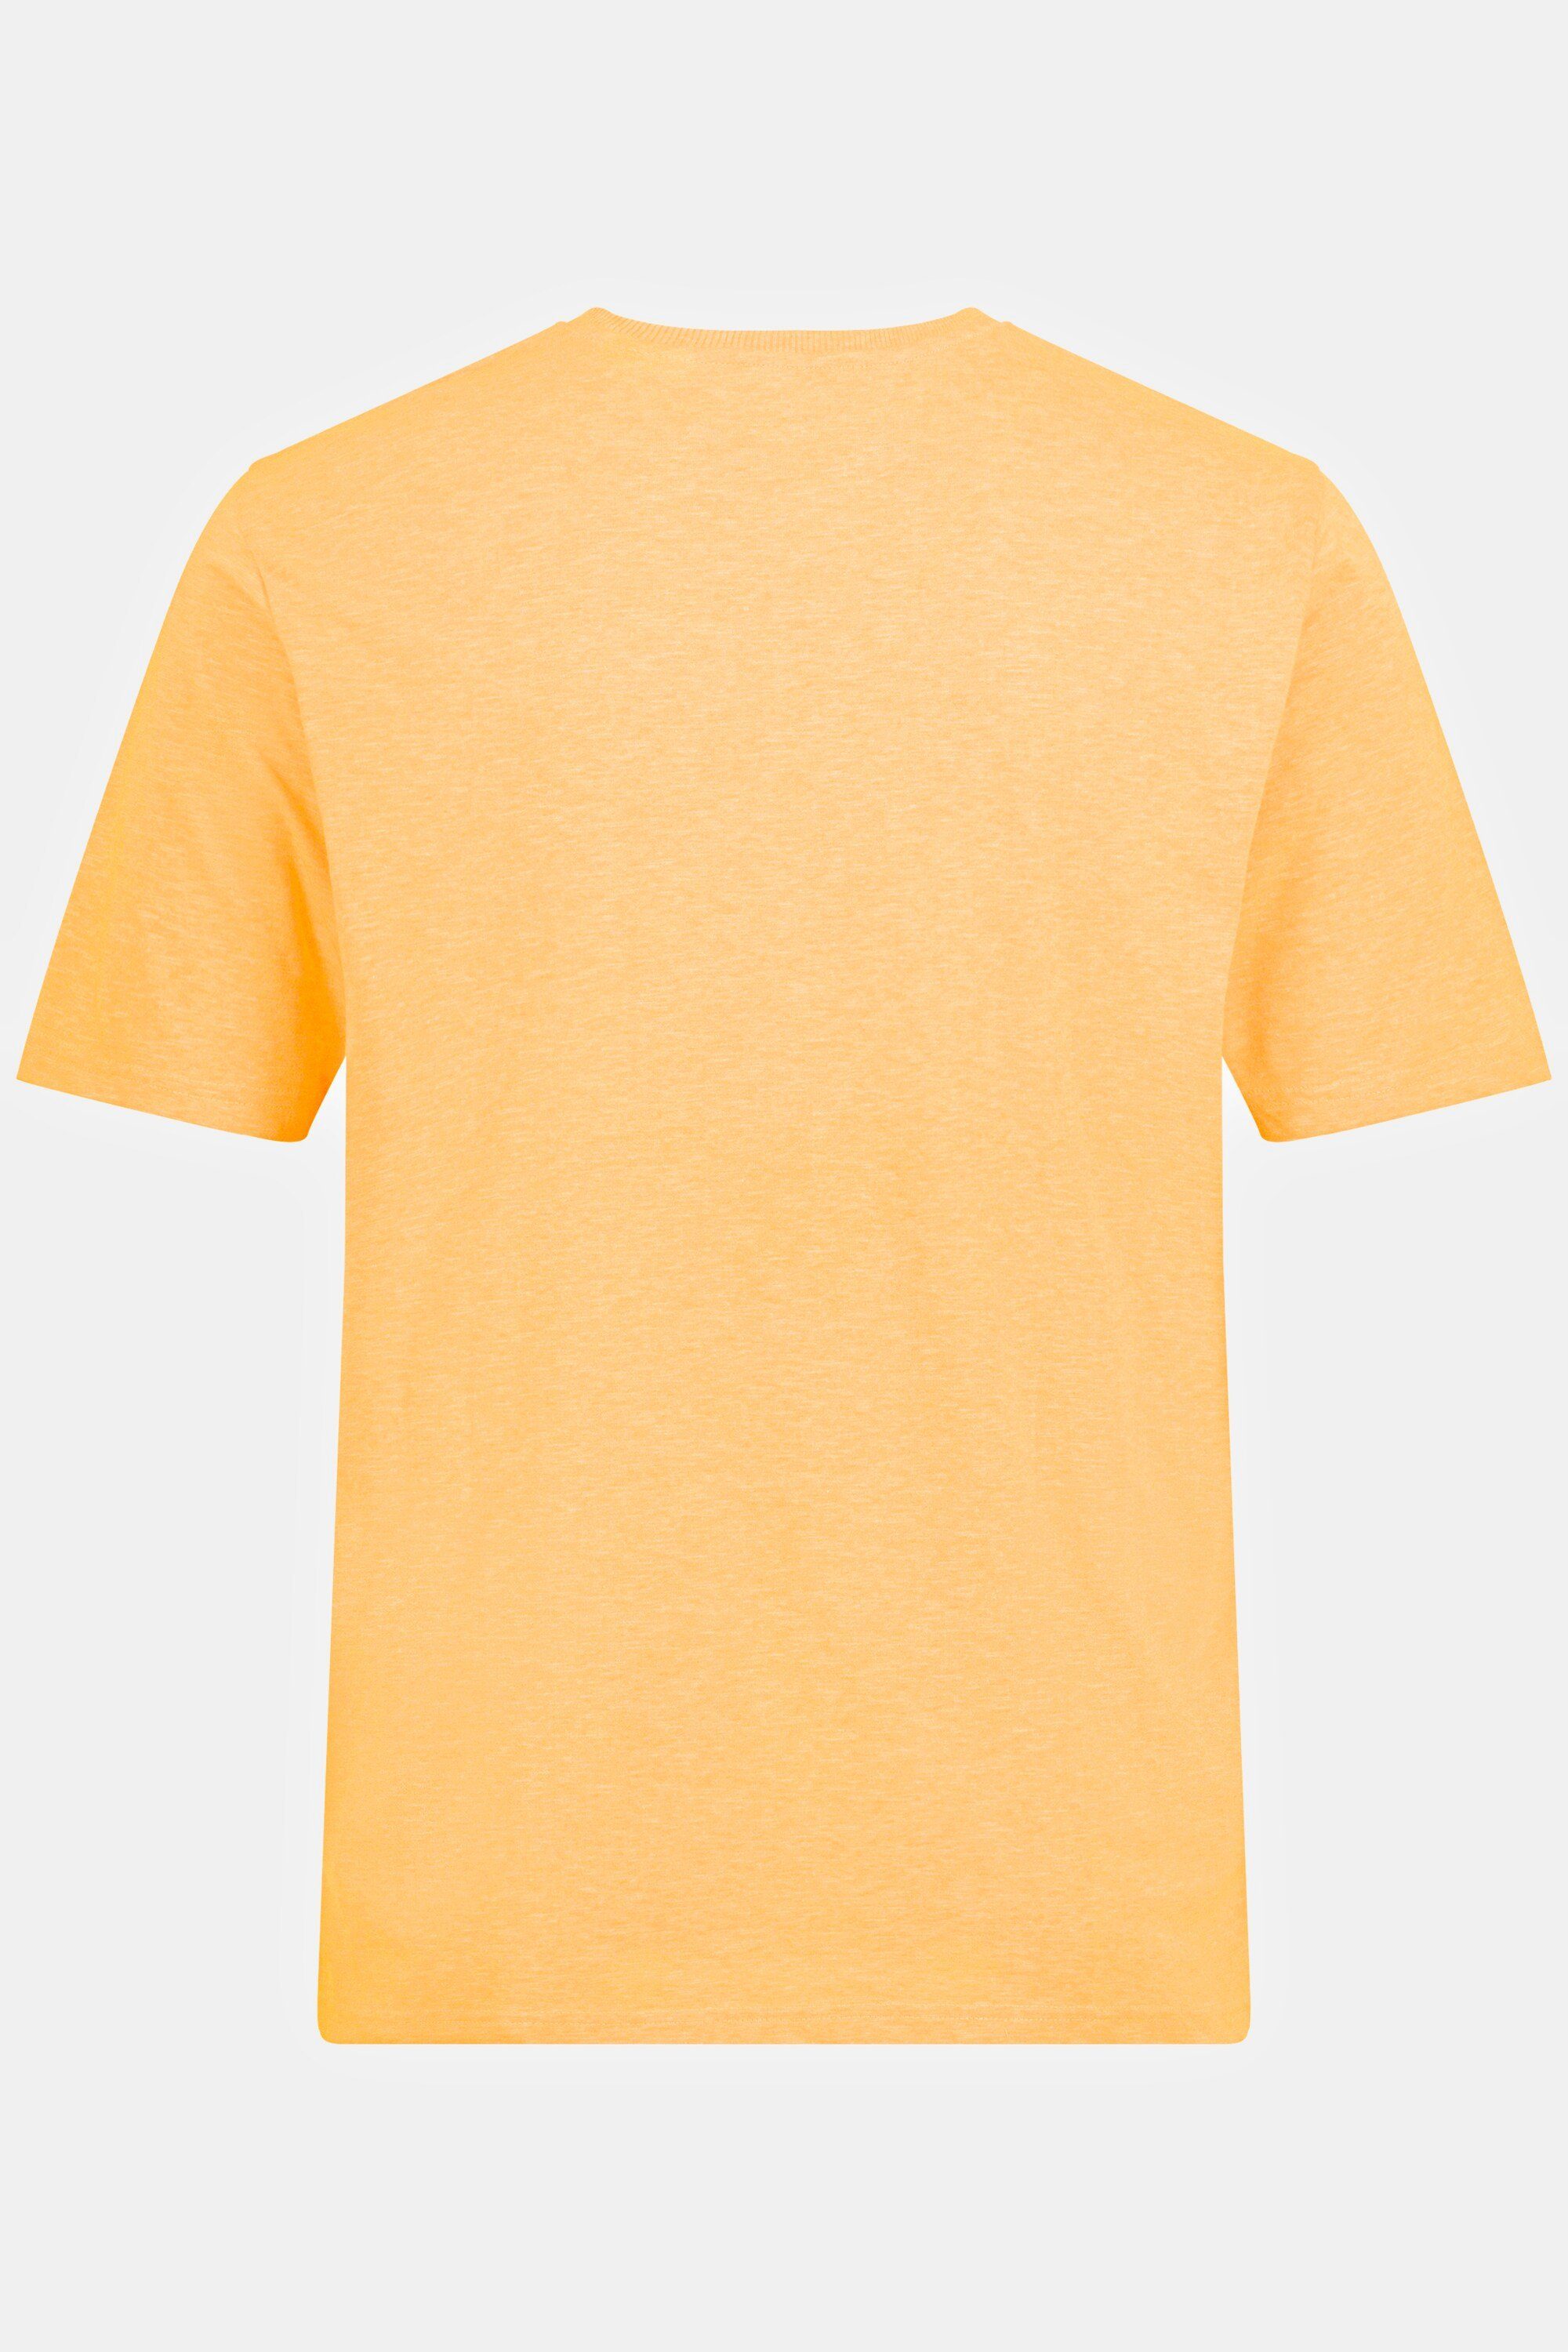 JP1880 neon T-Shirt T-Shirt V-Ausschnitt orange Halbarm